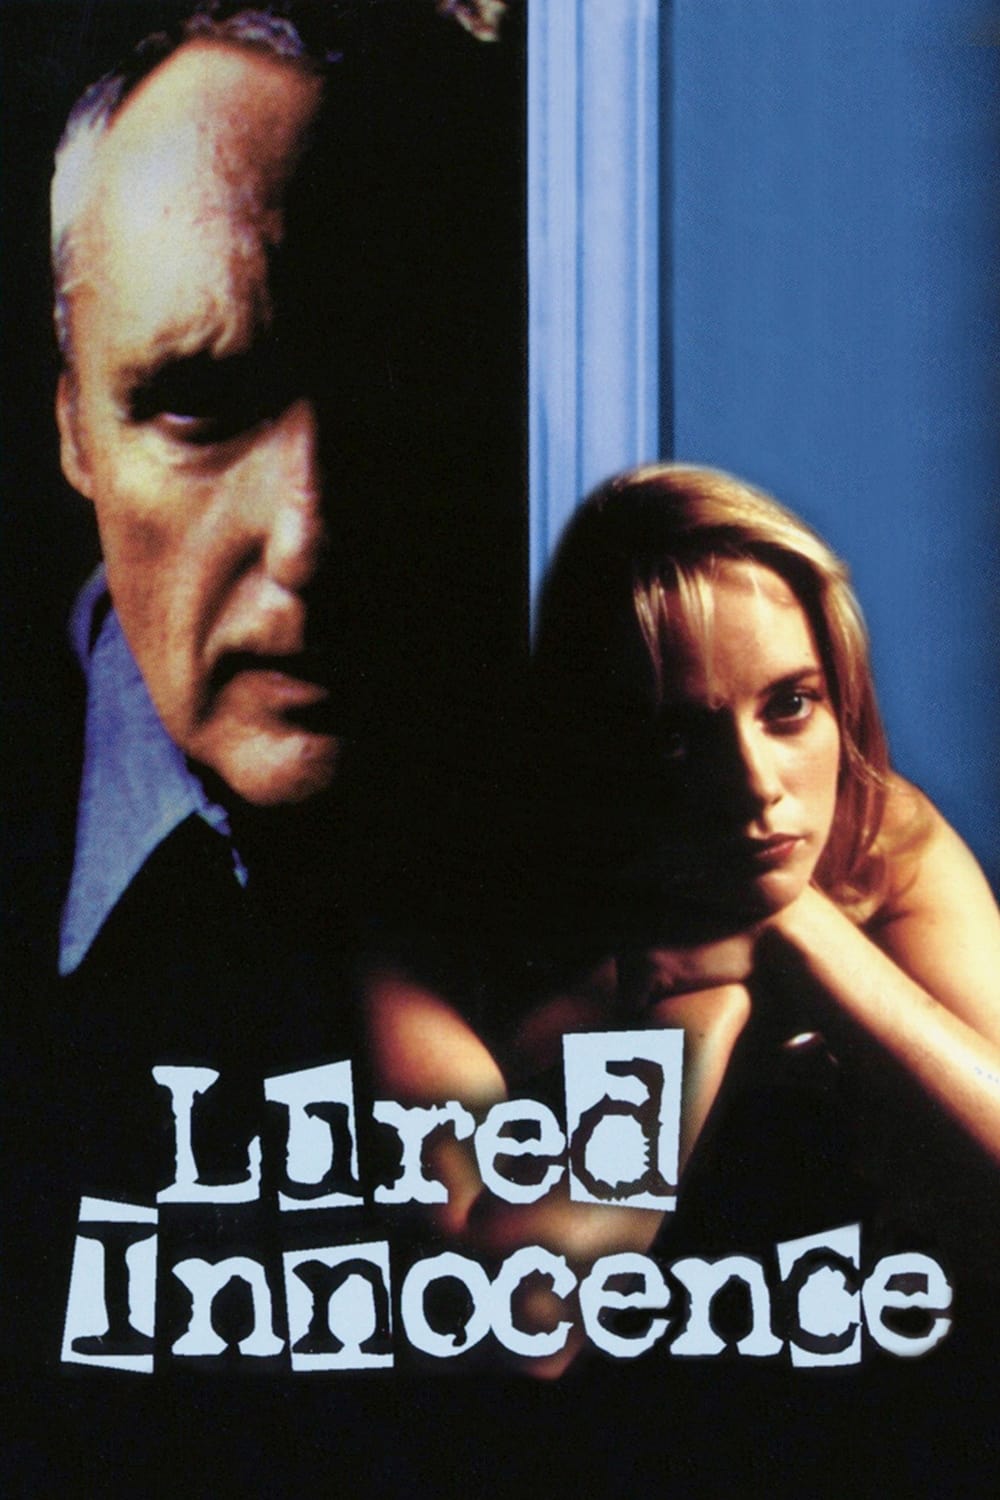 Lured Innocence (2000)